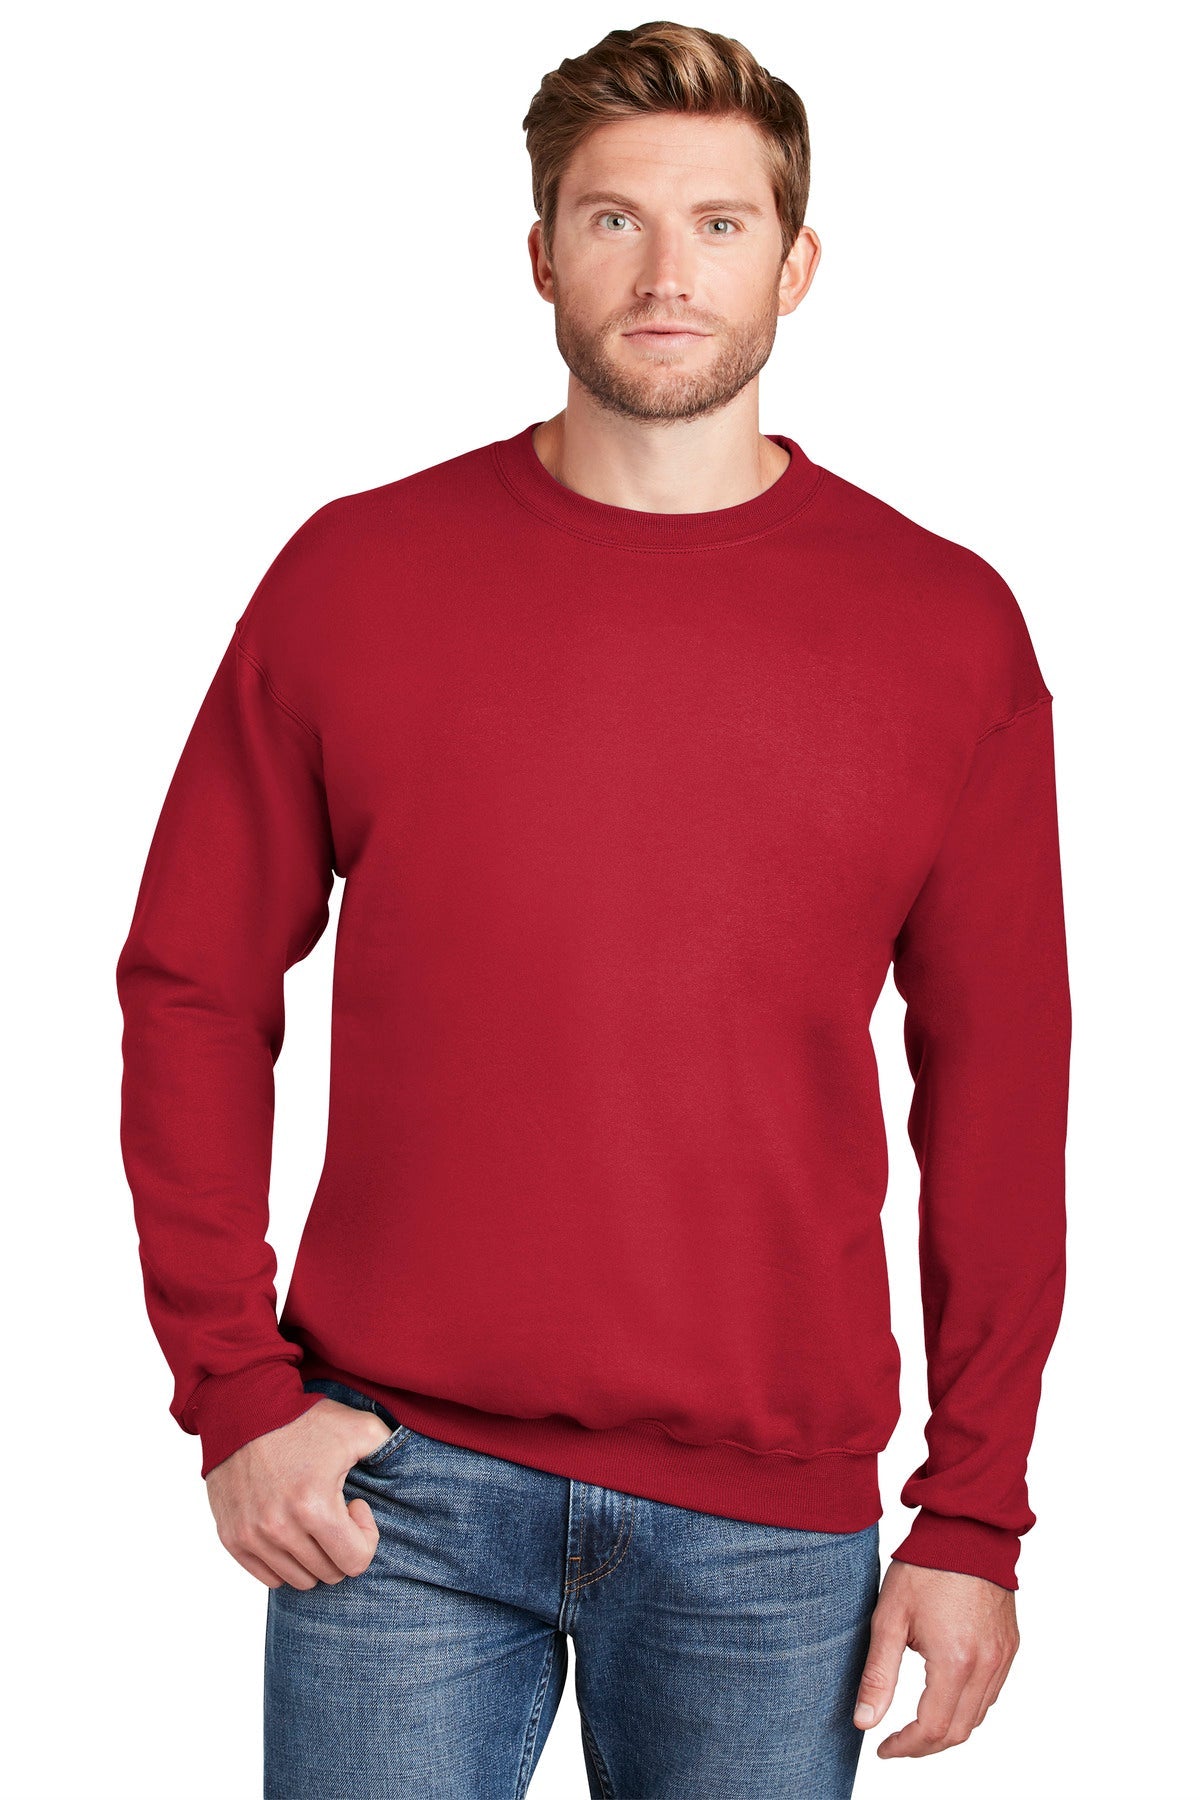 Hanes® Ultimate Cotton® - Crewneck Sweatshirt. F260 - DFW Impression